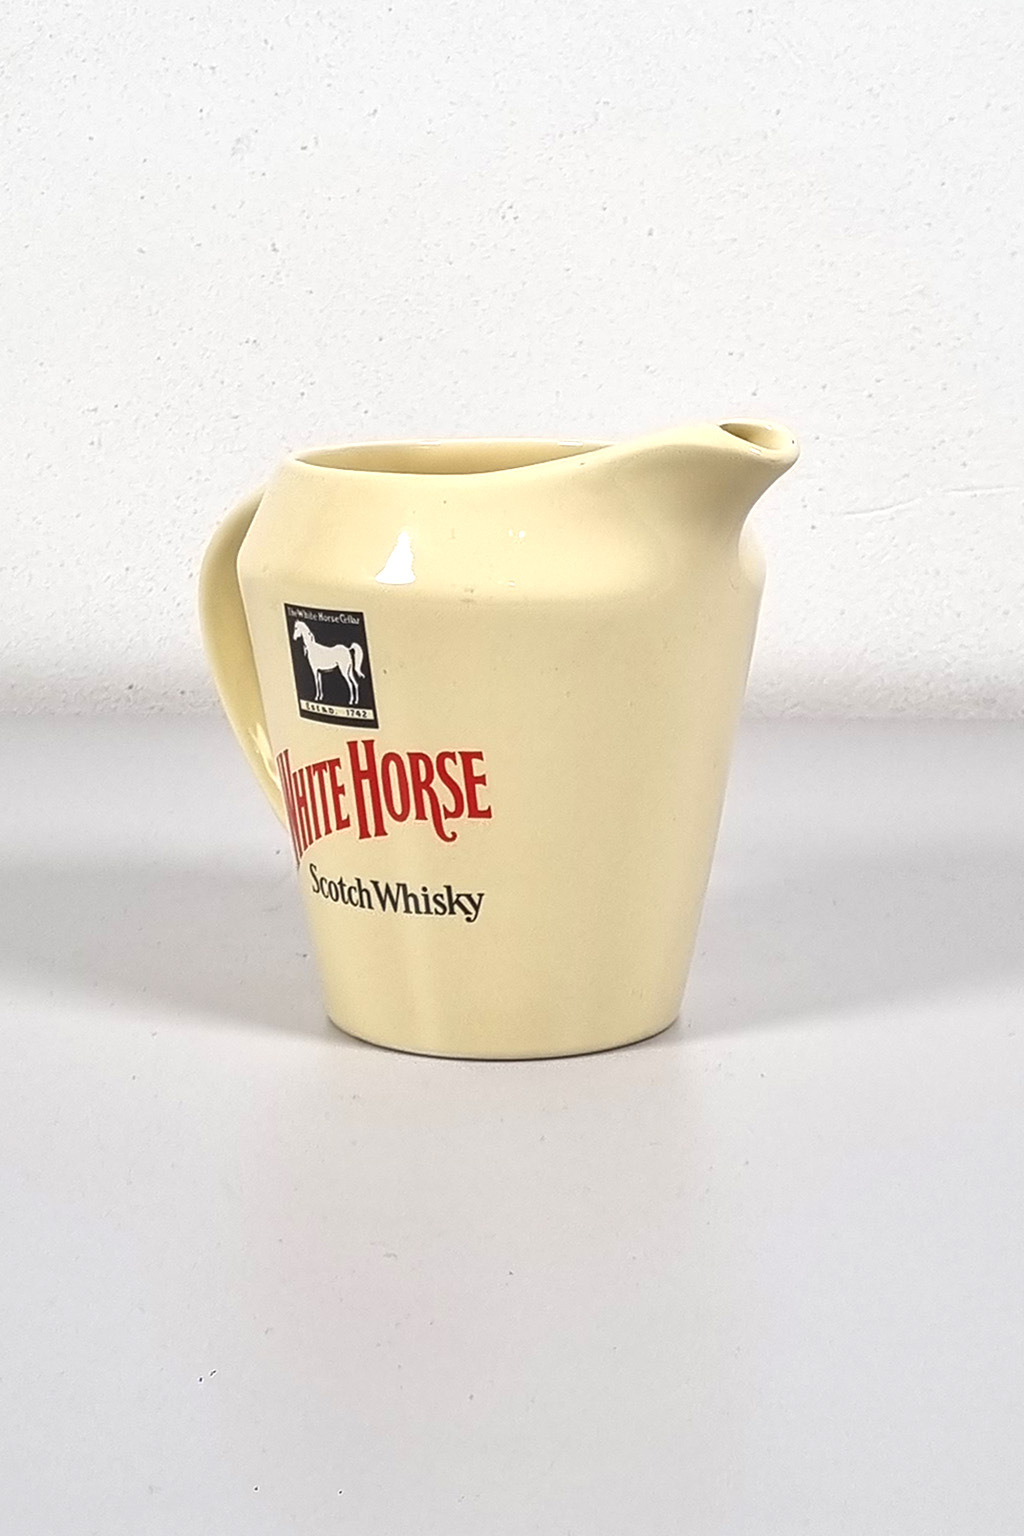 Vintage White Horse jug